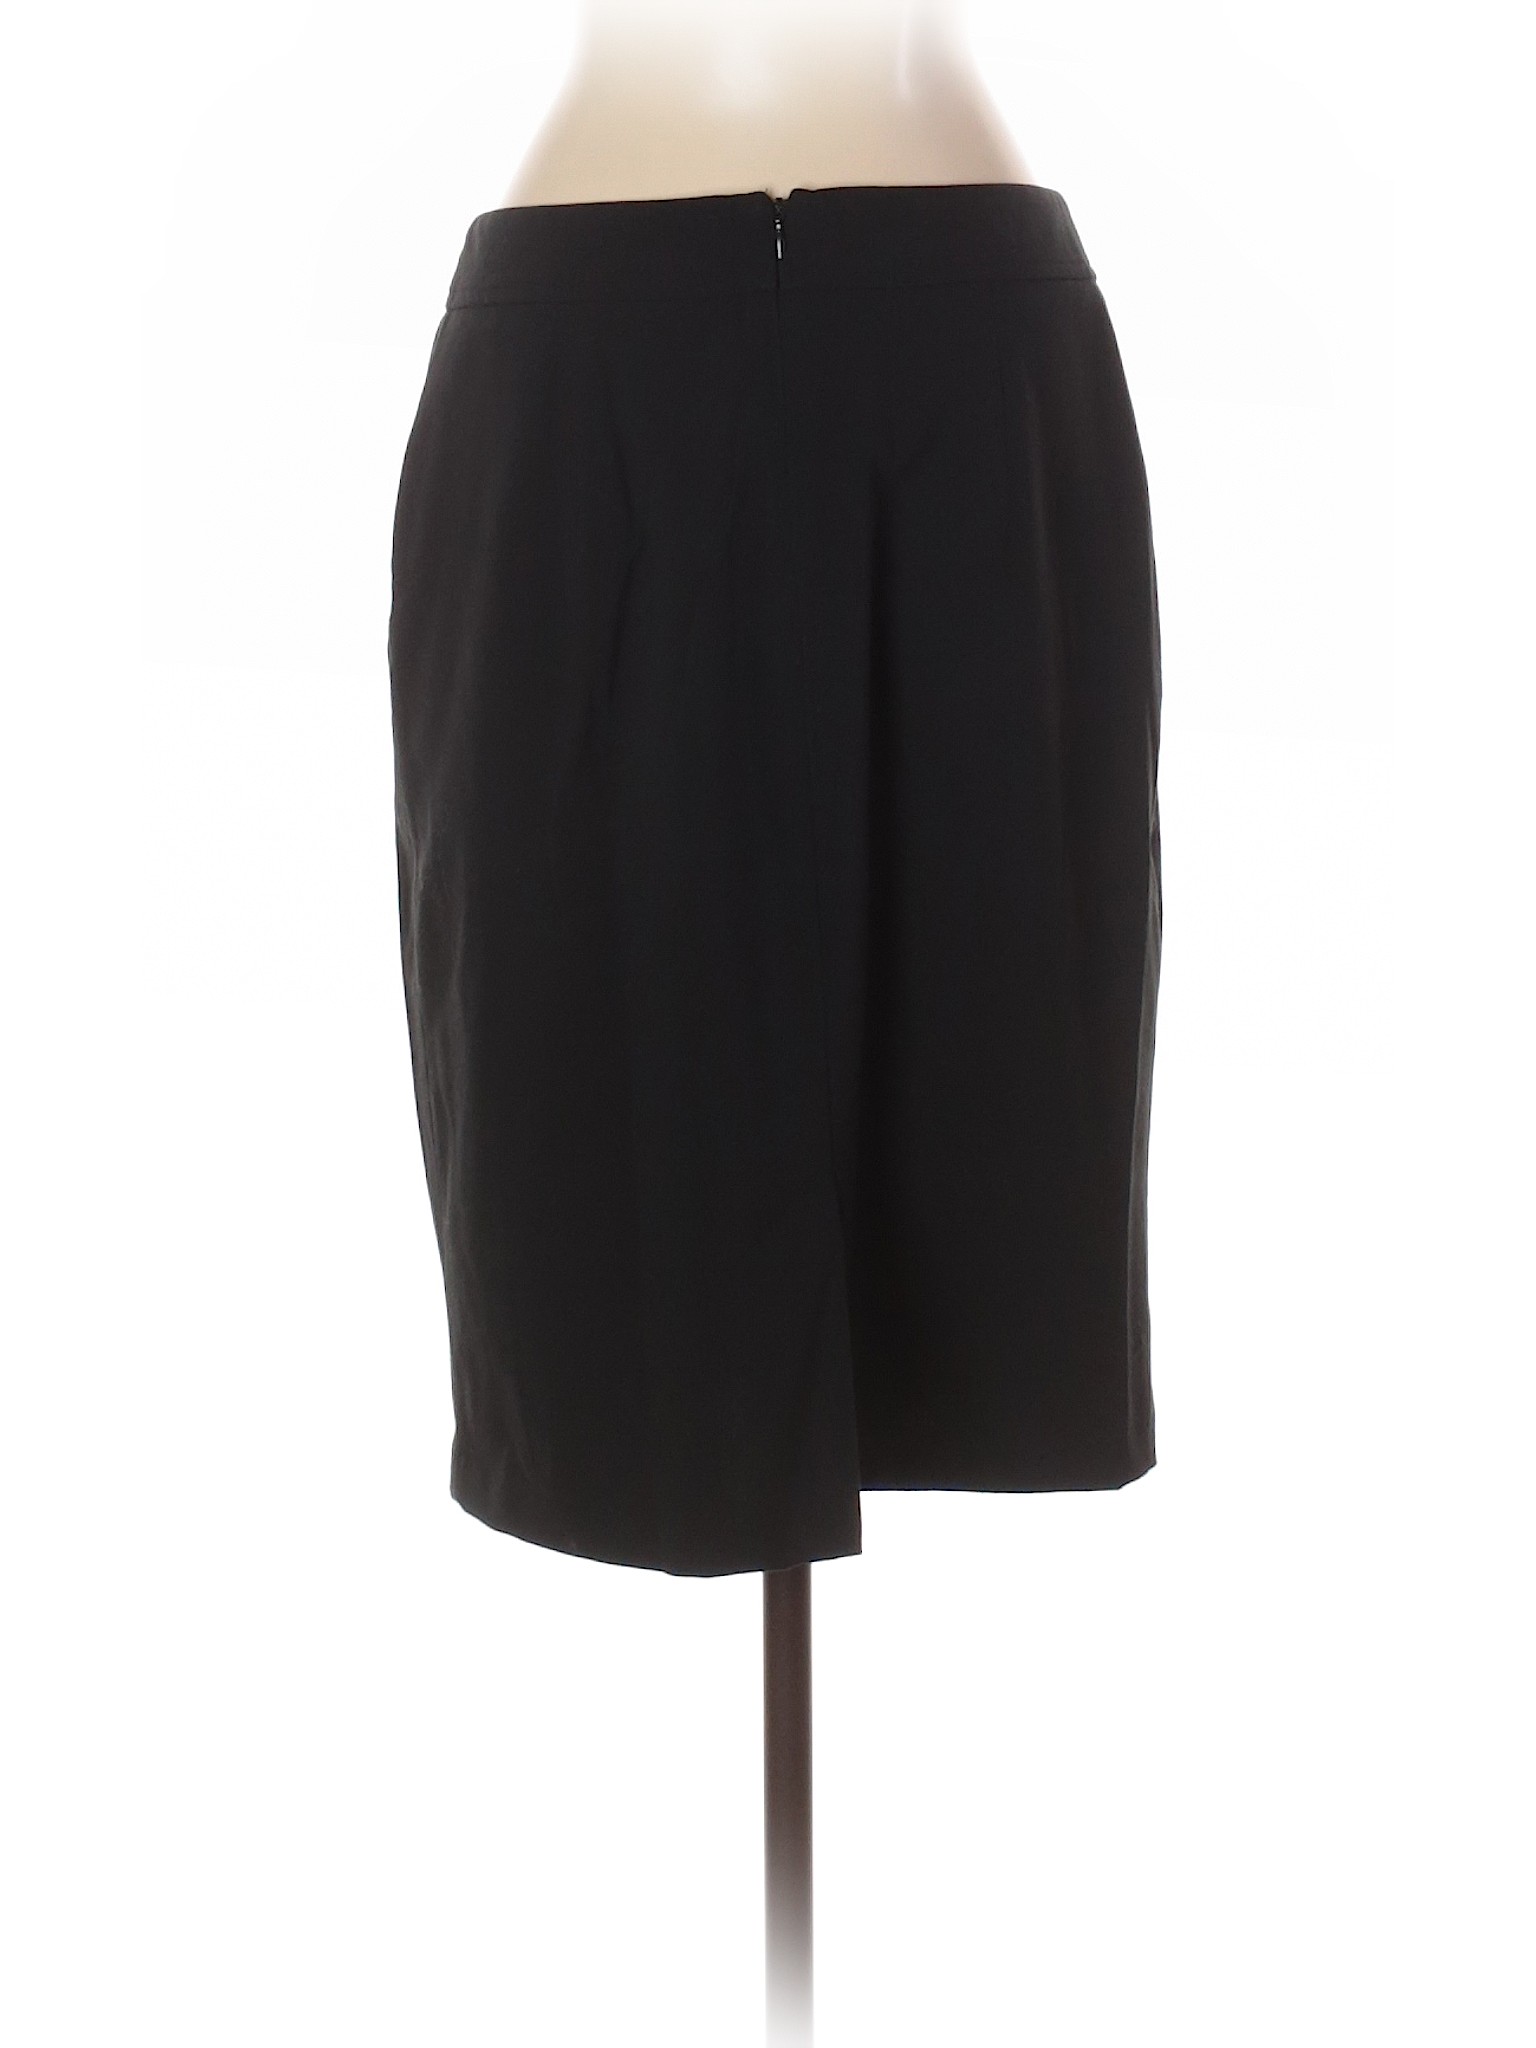 New York & Company Women Black Casual Skirt 2 | eBay